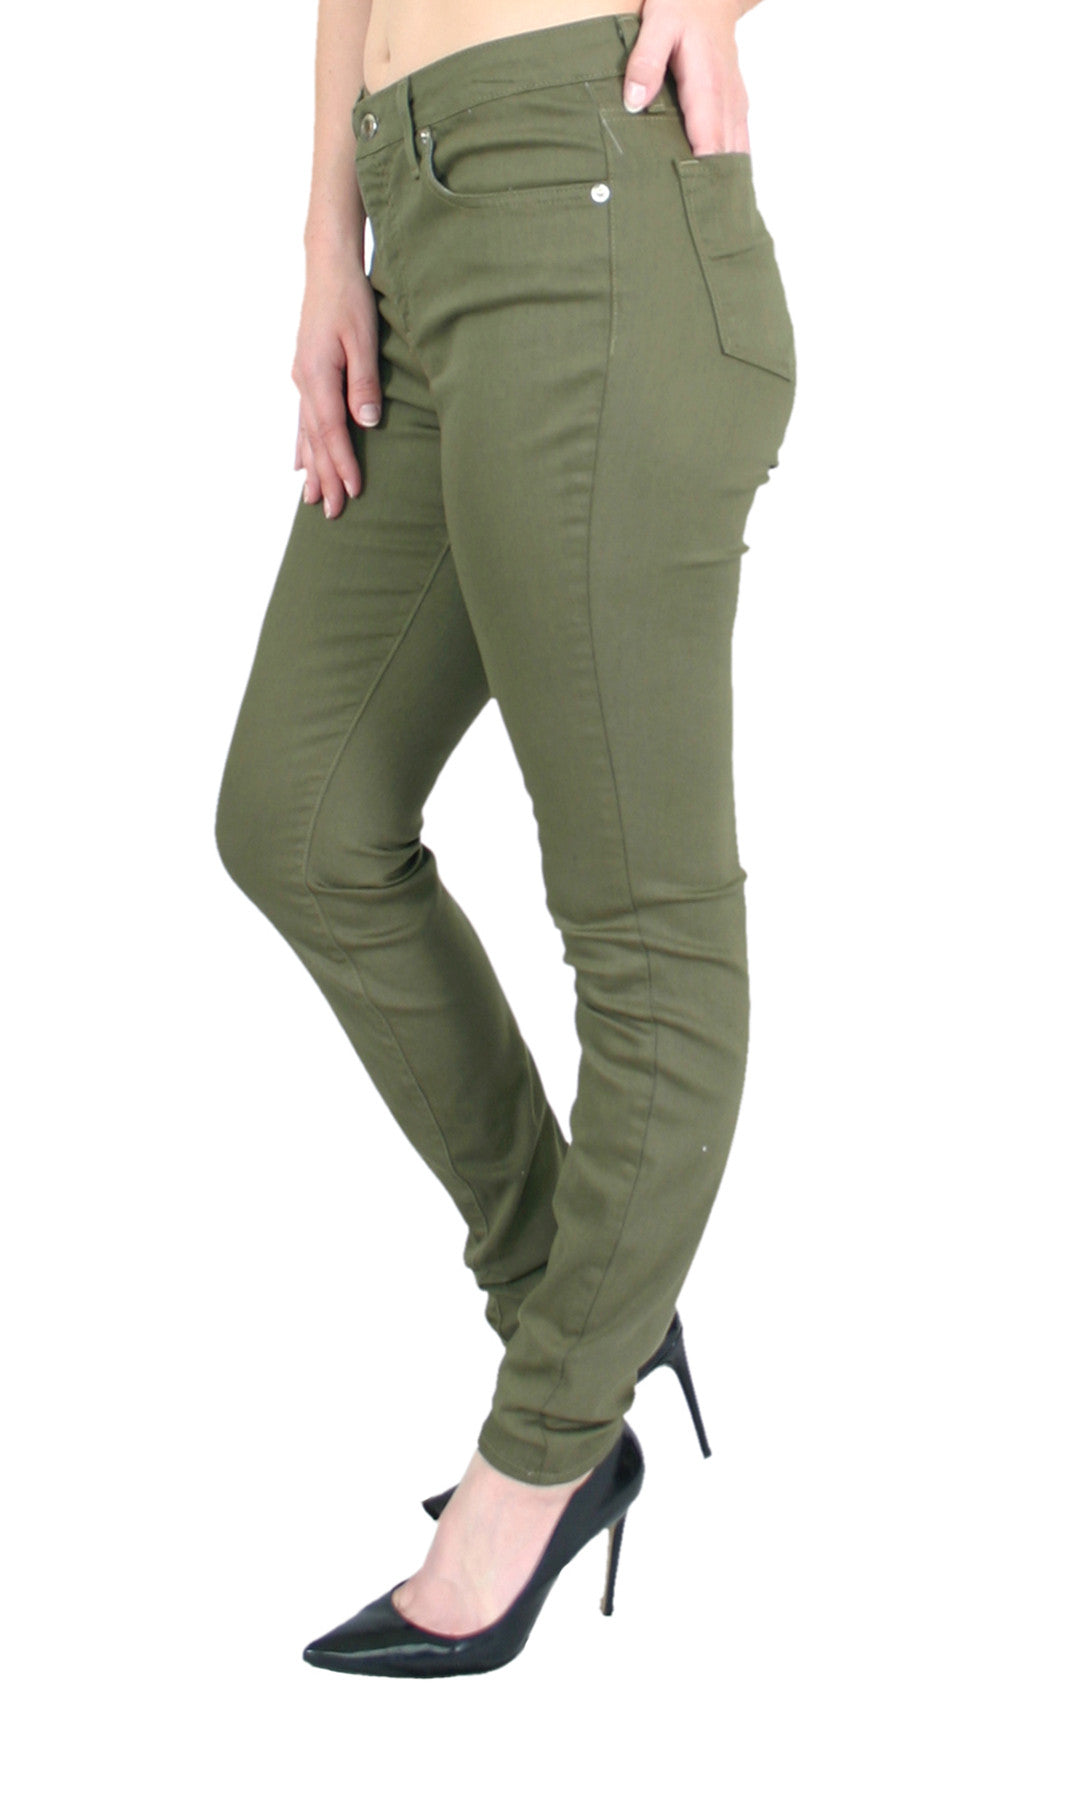 TrueSlim™ Olive Jeggings for Women – TrueSlim Jeans